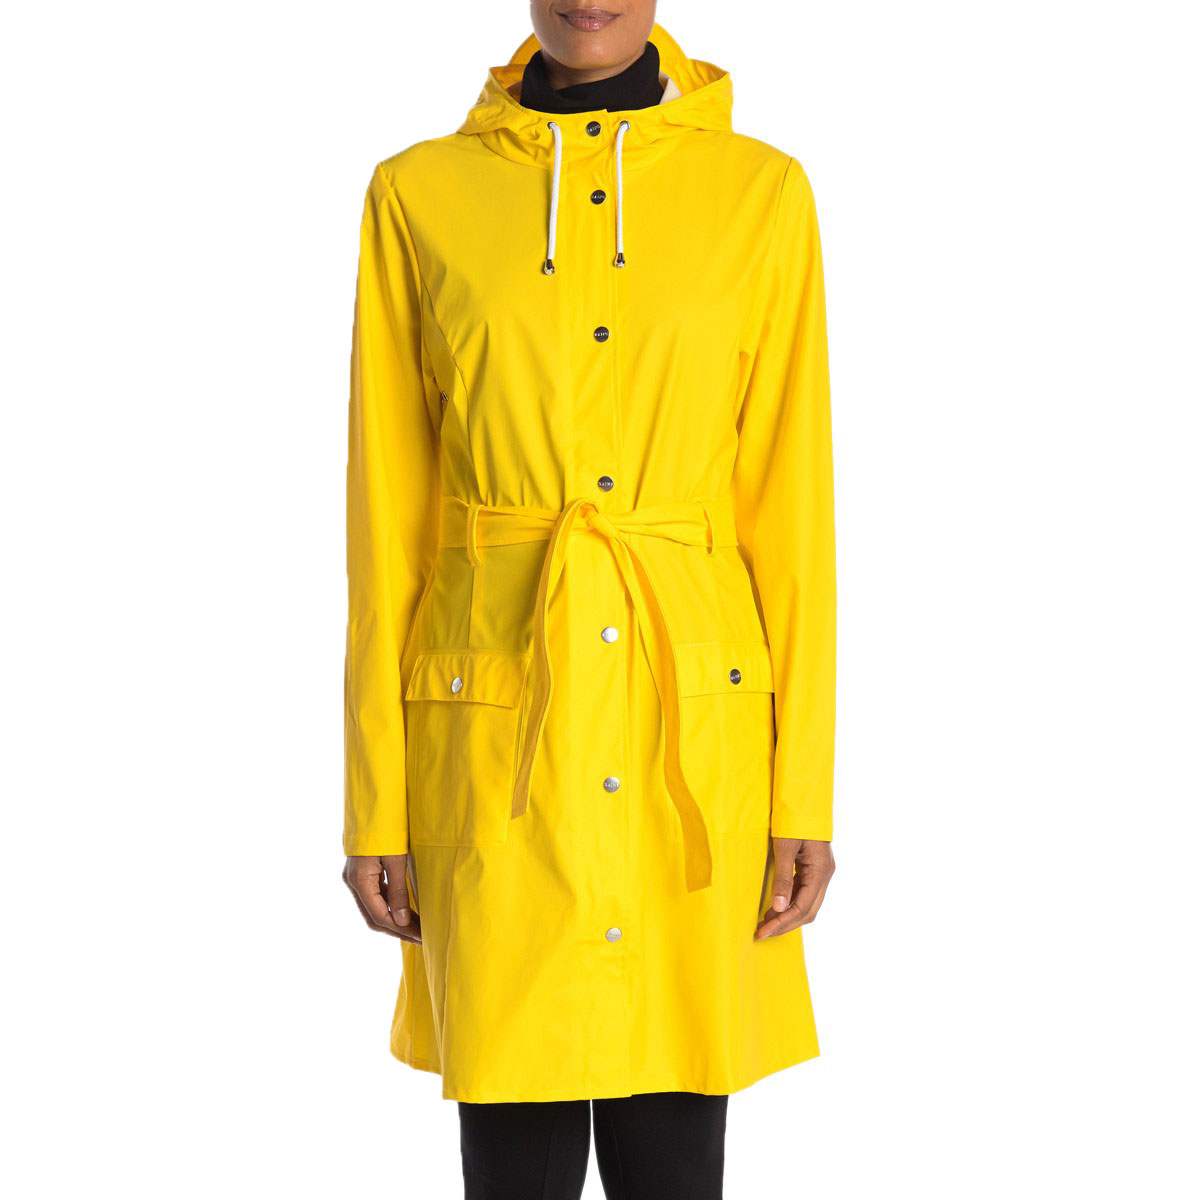 RAINS Women's Curve Rain Jacket, Yellow, X-Small/Small - image 1 of 2